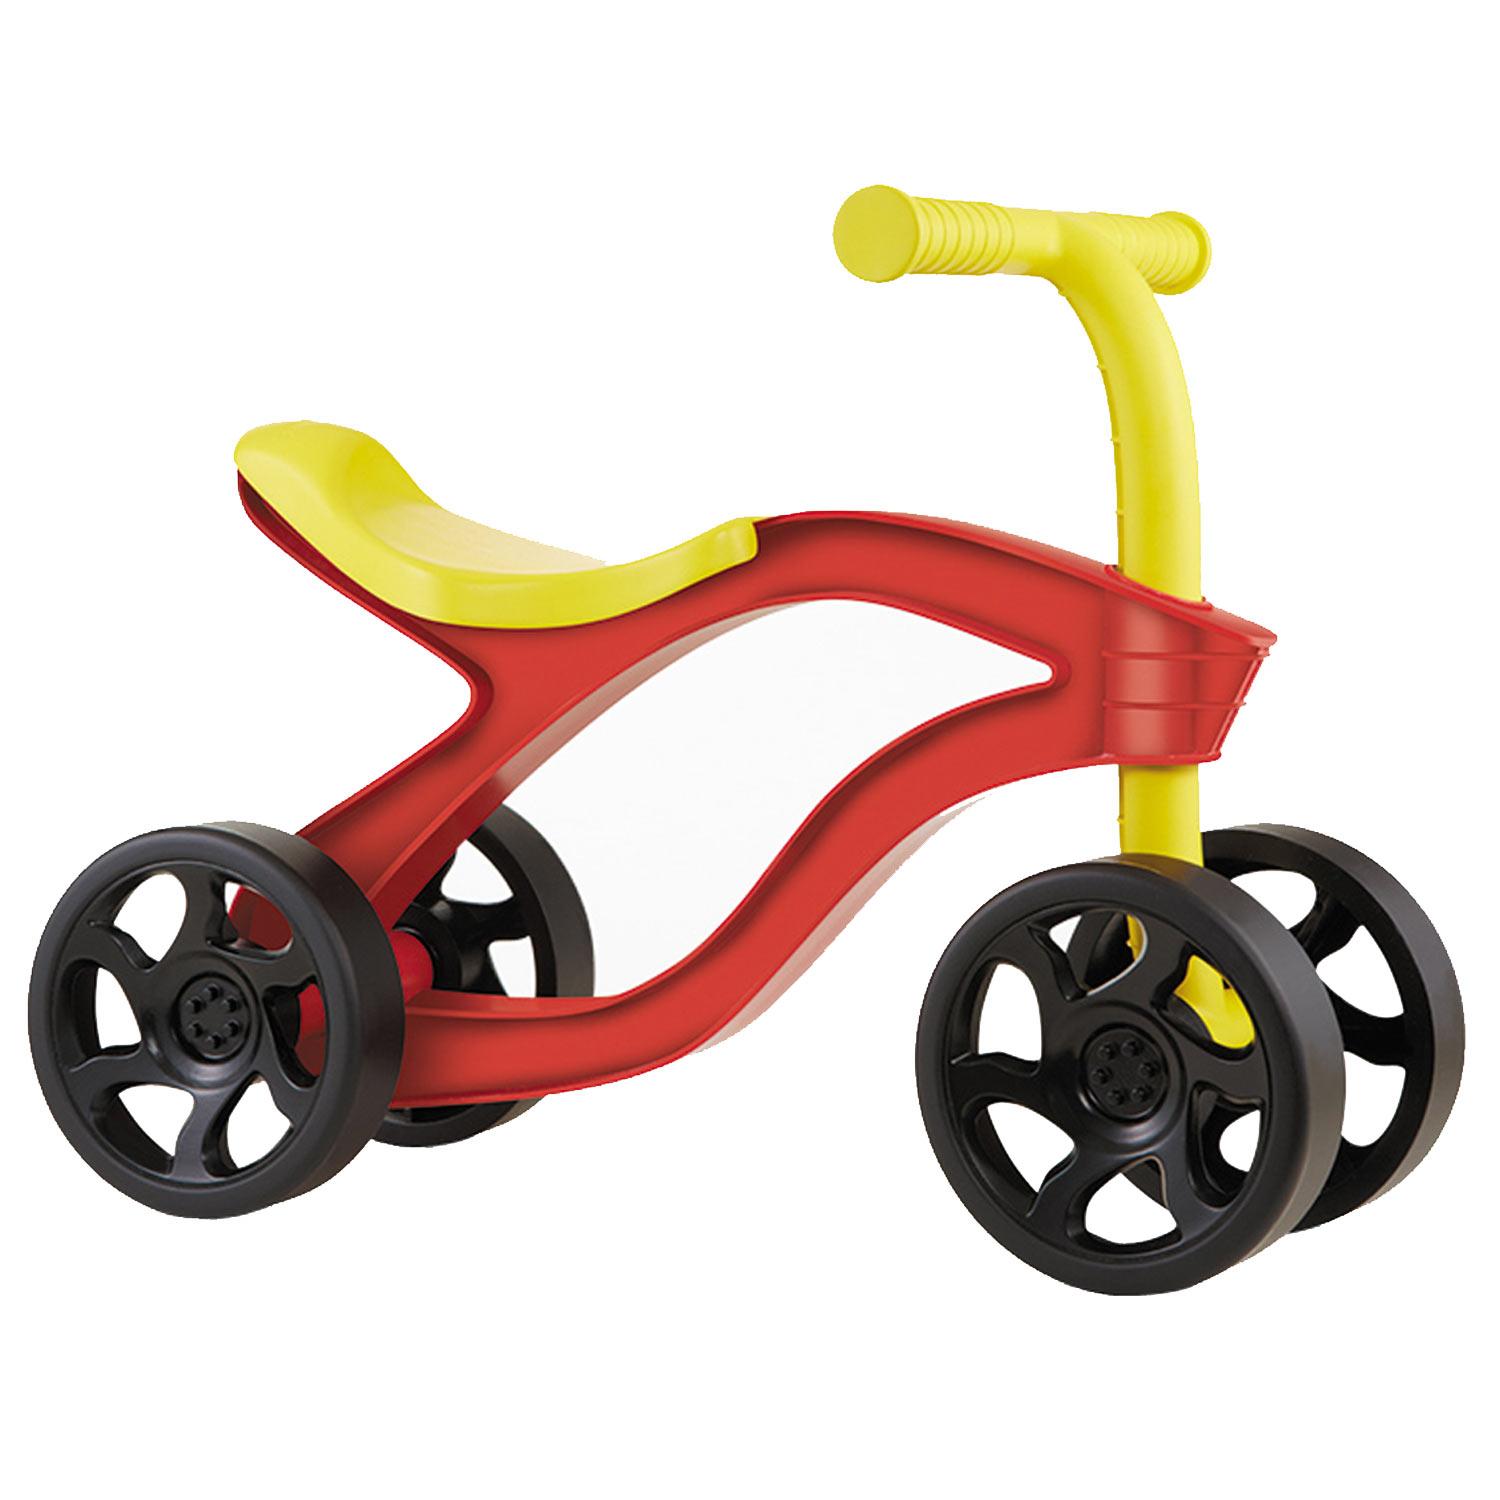 Little Tikes Scooteroo 4 Wheel Toddler Indoor Outdoor Ride On Toy Bike